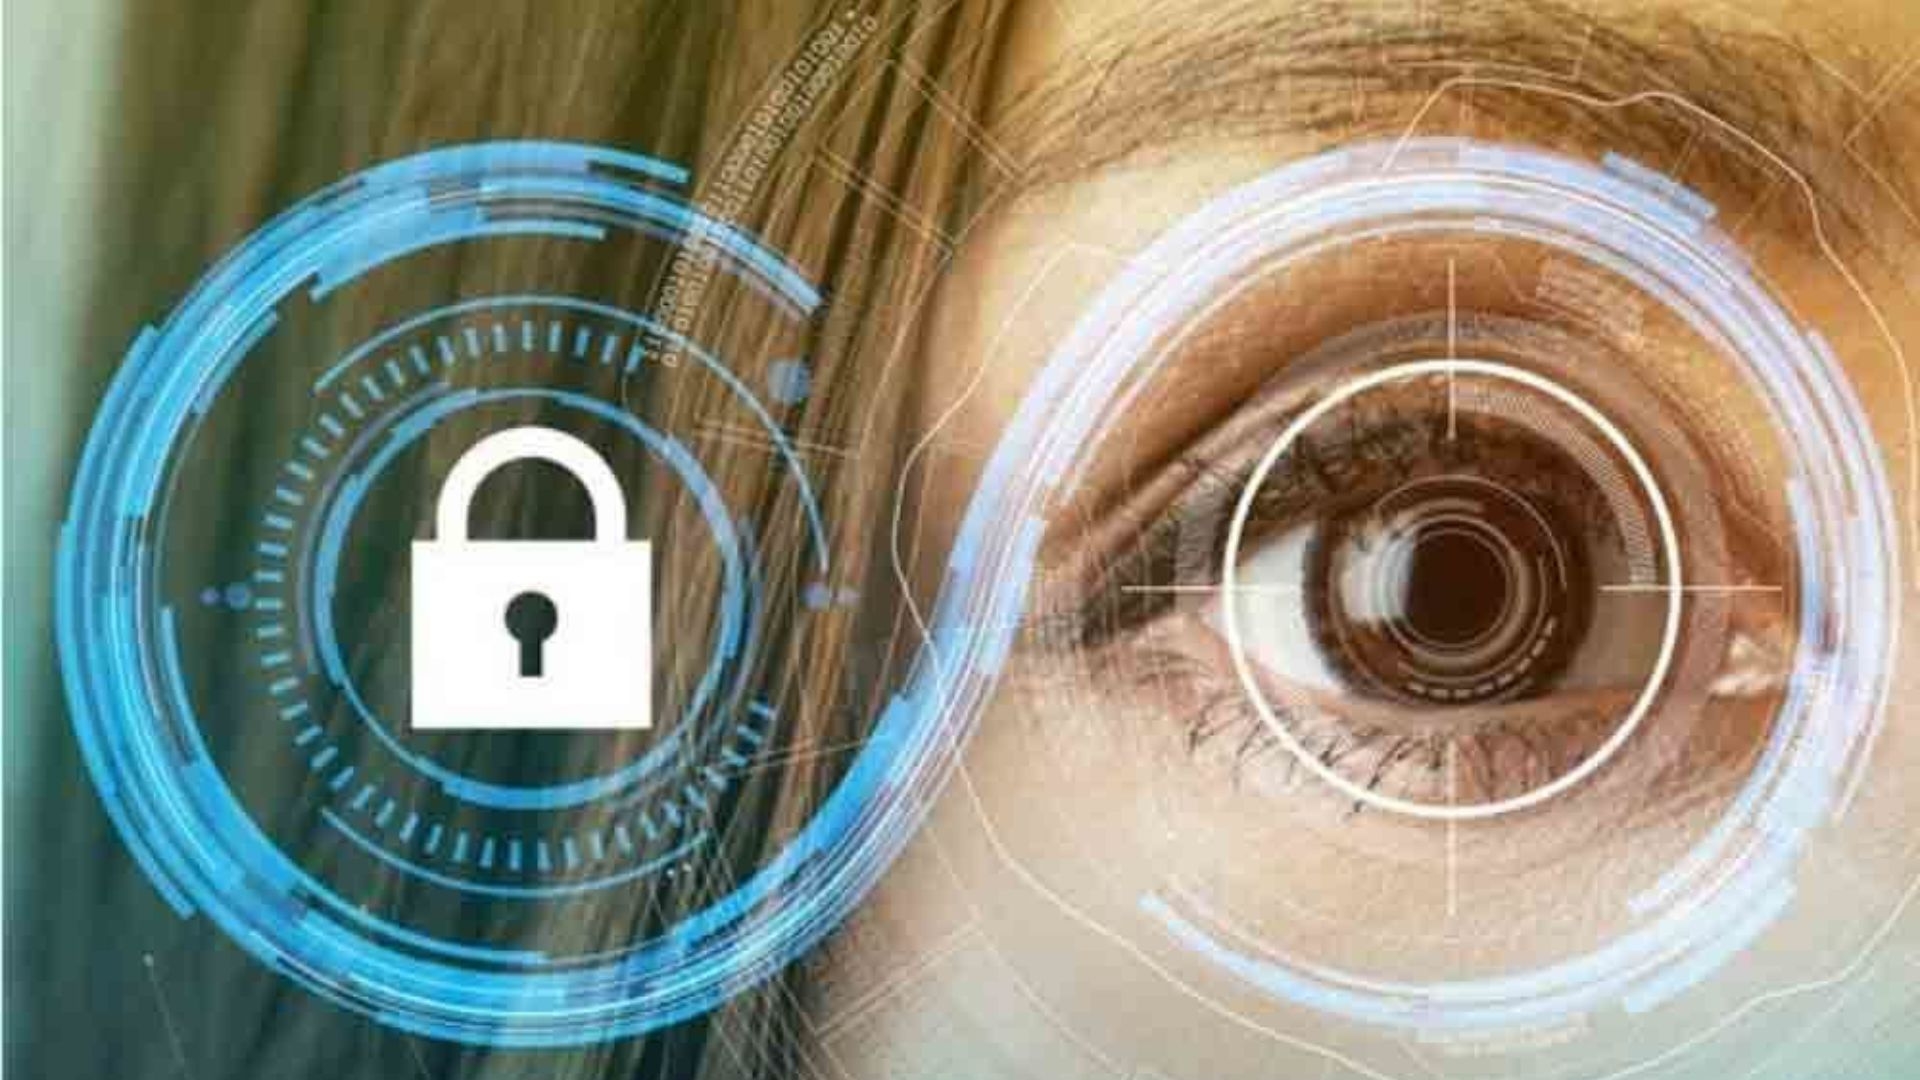 Biometric locks scan the user's retina to unlock